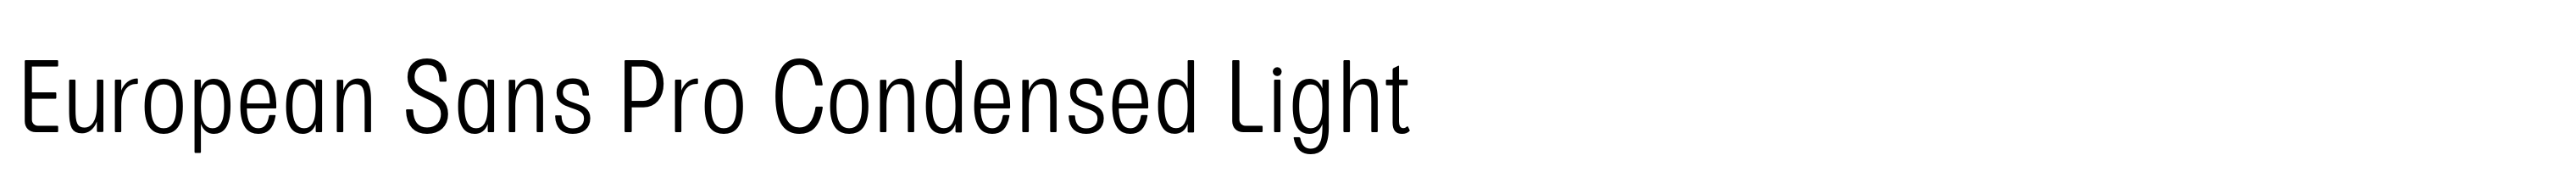 European Sans Pro Condensed Light